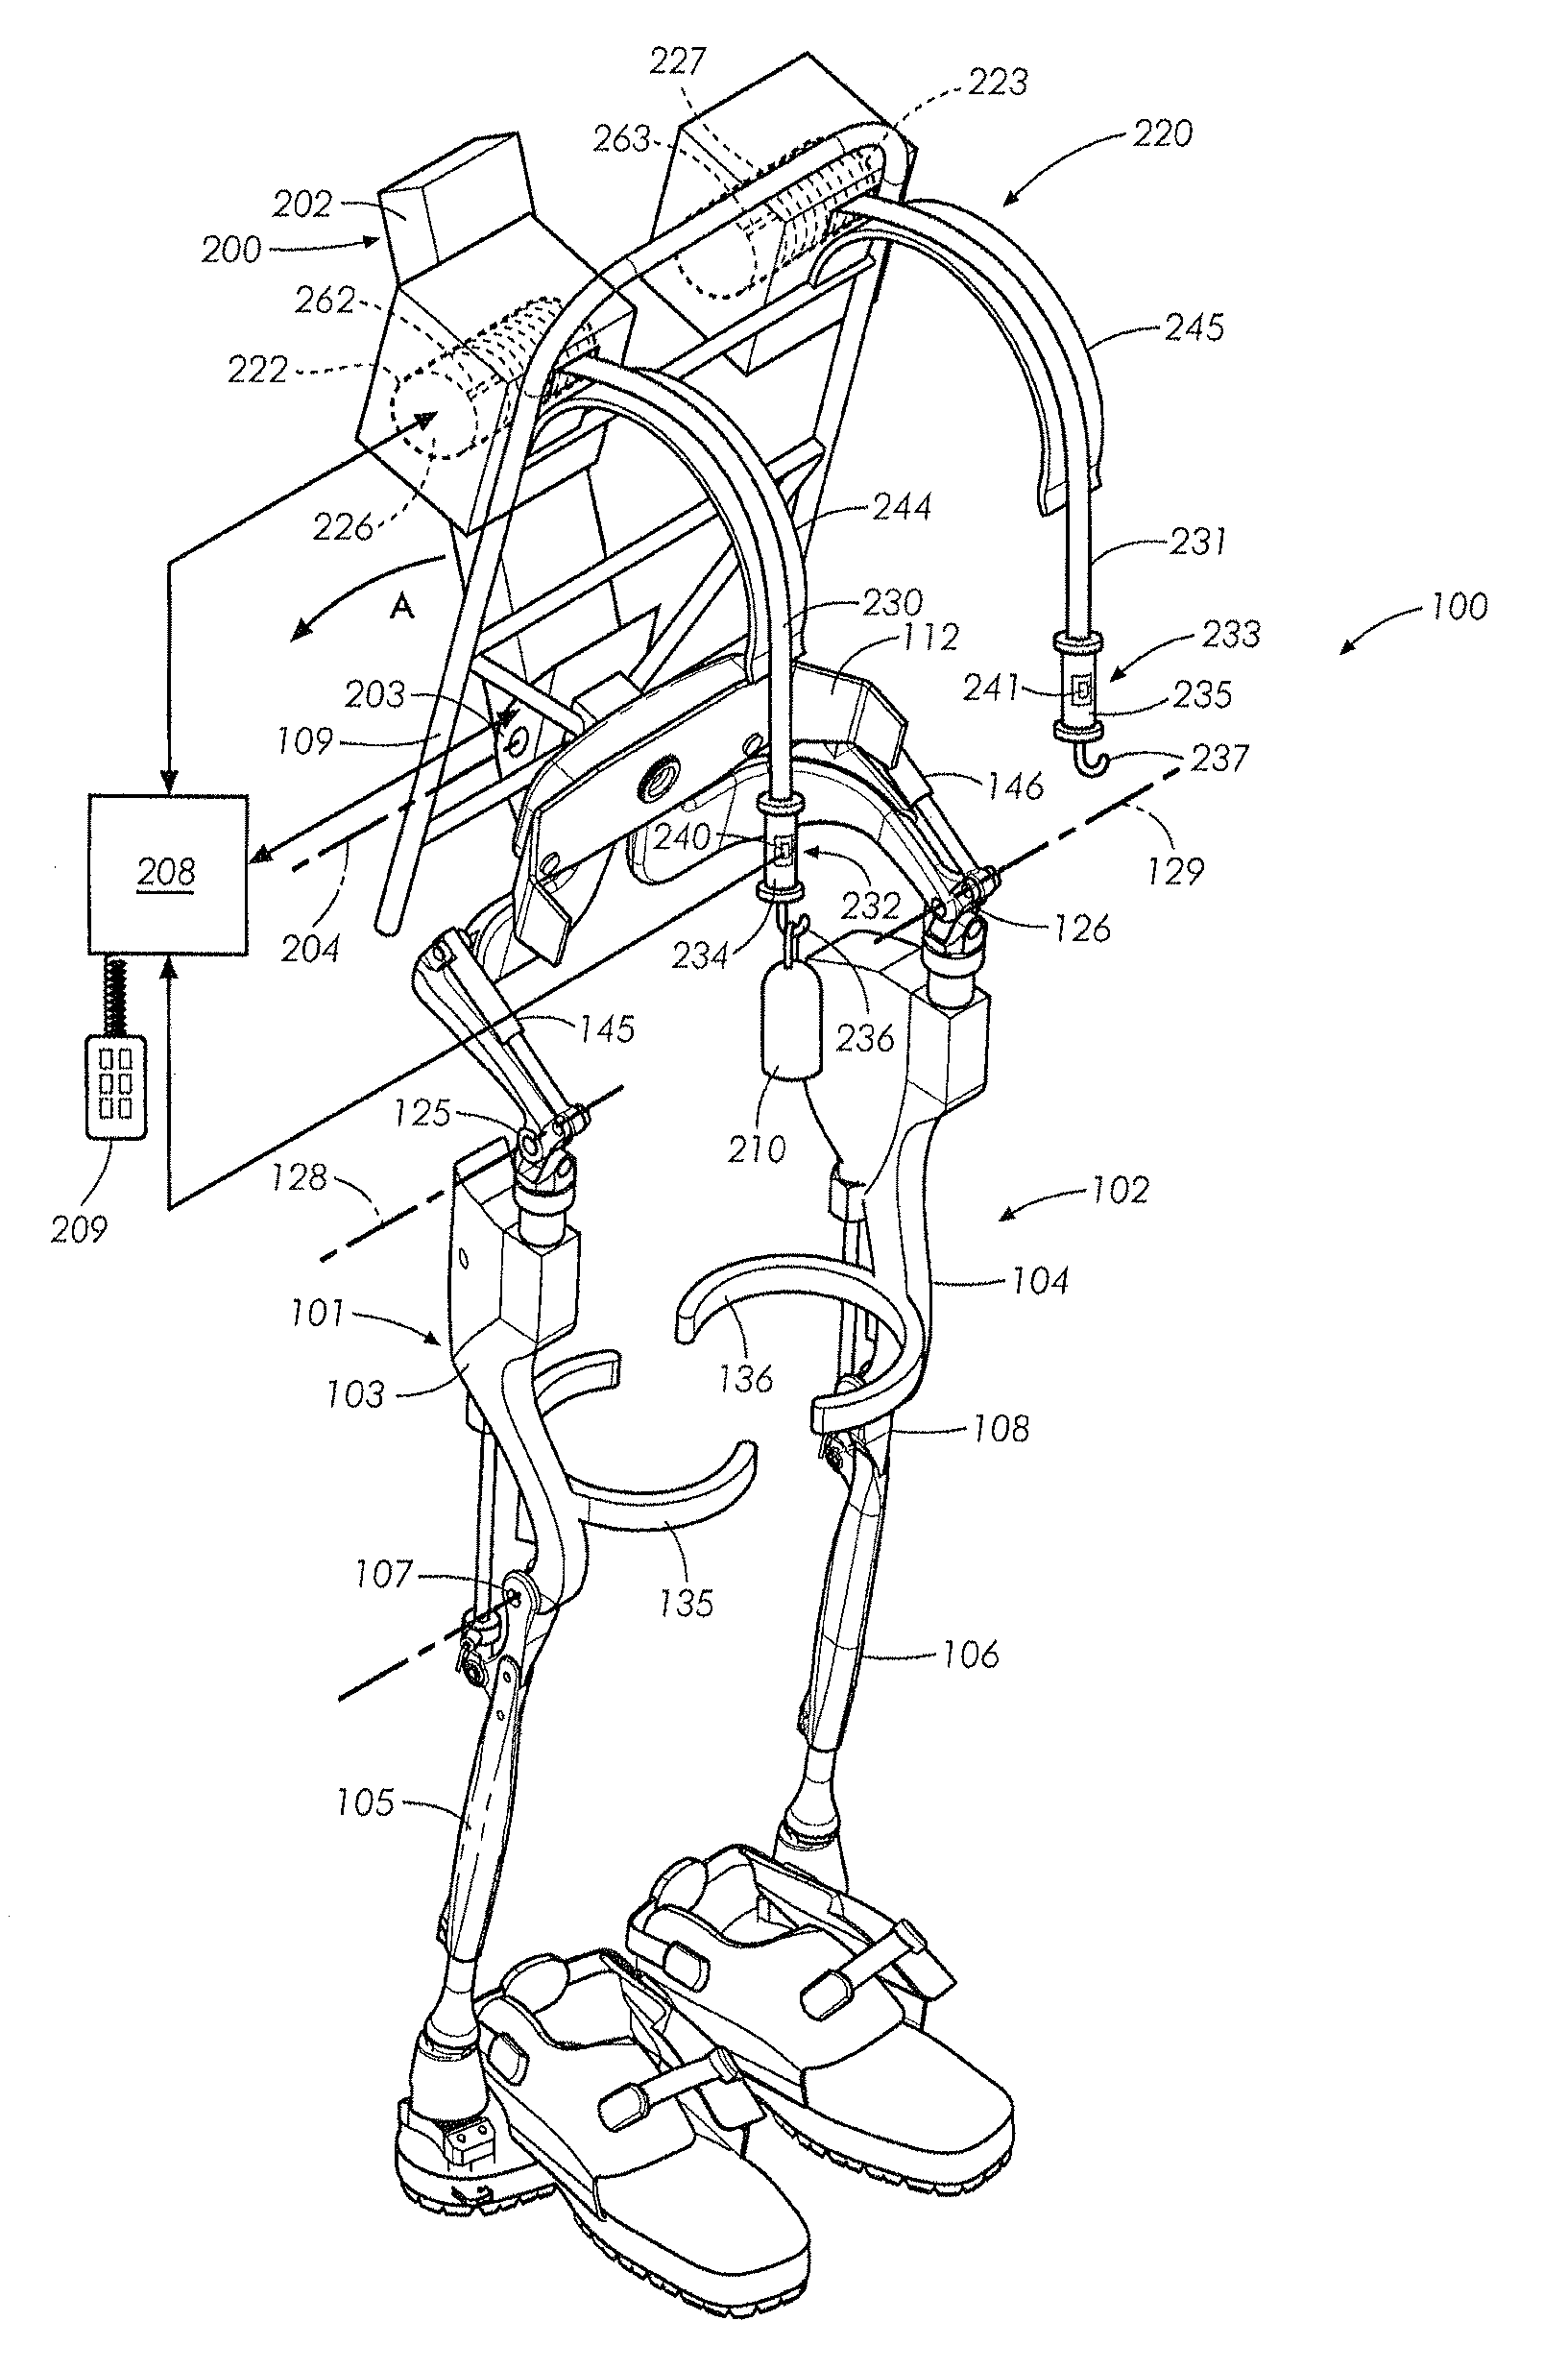 Exoskeleton load handling system and method of use